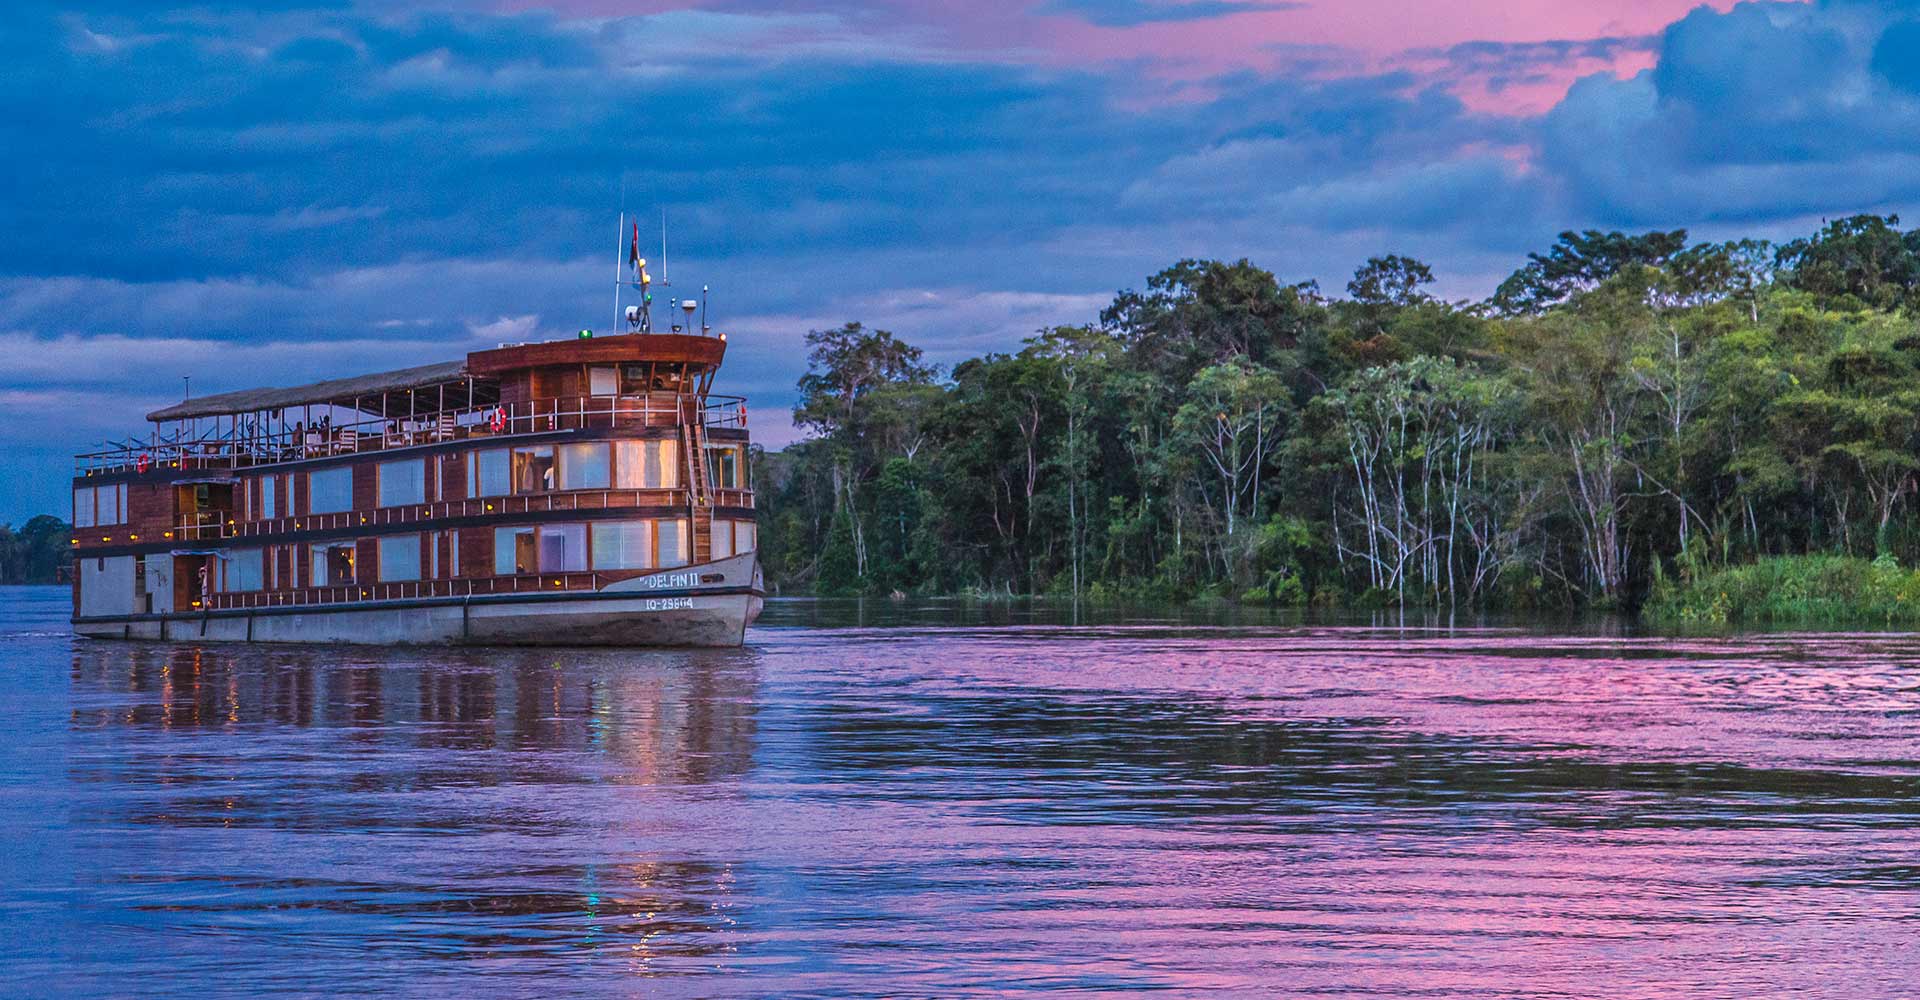 Defin II cruising the Amazon River